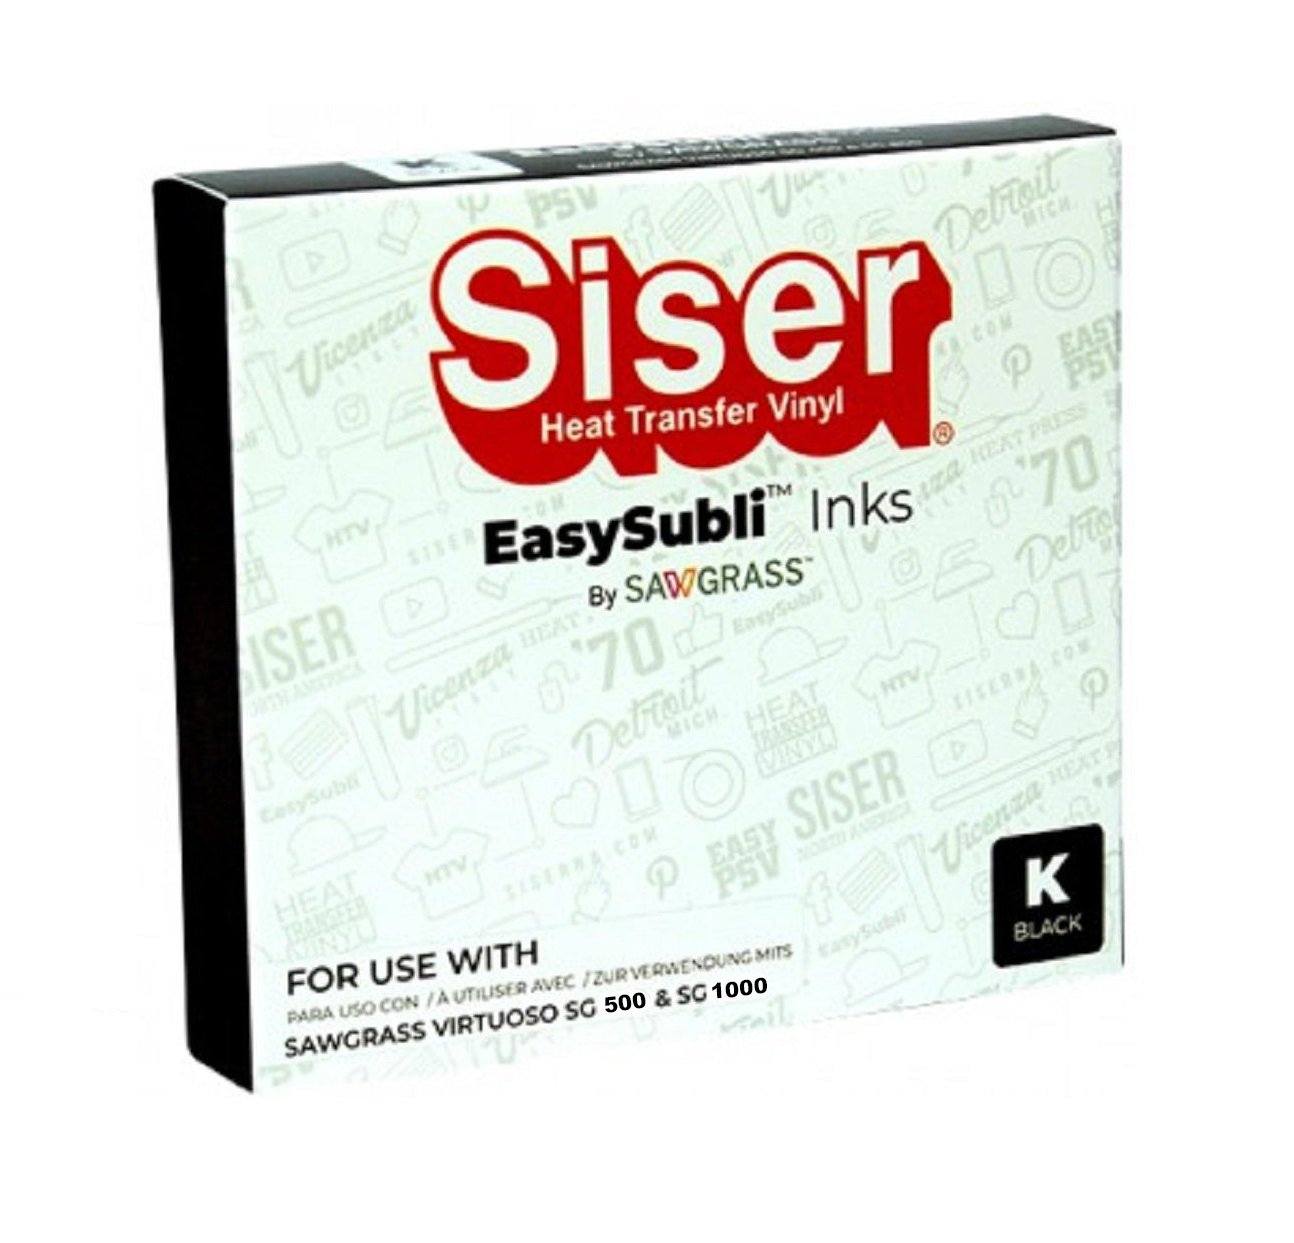 EasySubli Sublimation HTV by Siser 100 Sheets ***FREE SHIPPING